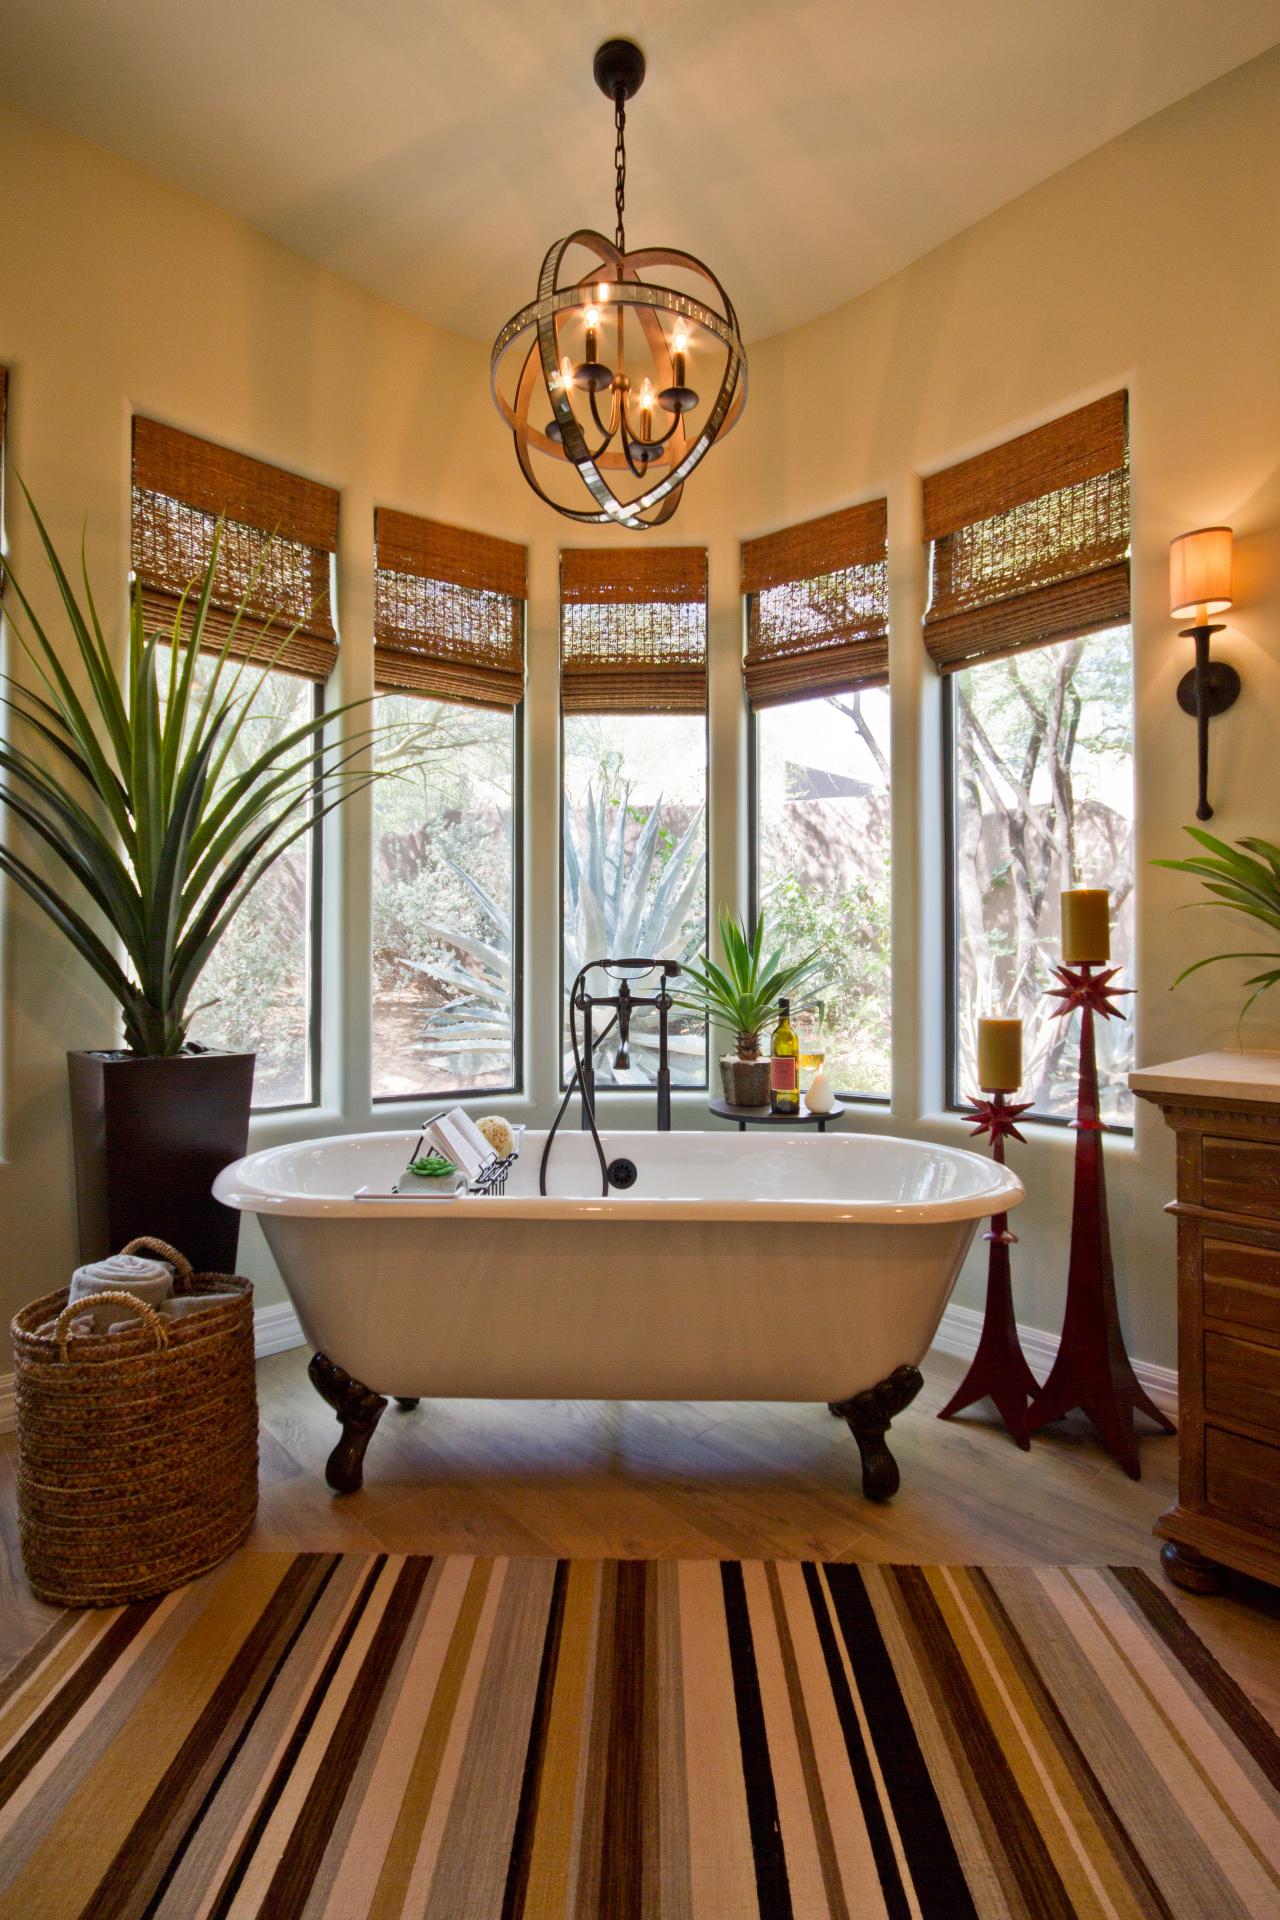 25 Southwestern Bathroom Design Ideas - The WoW Style